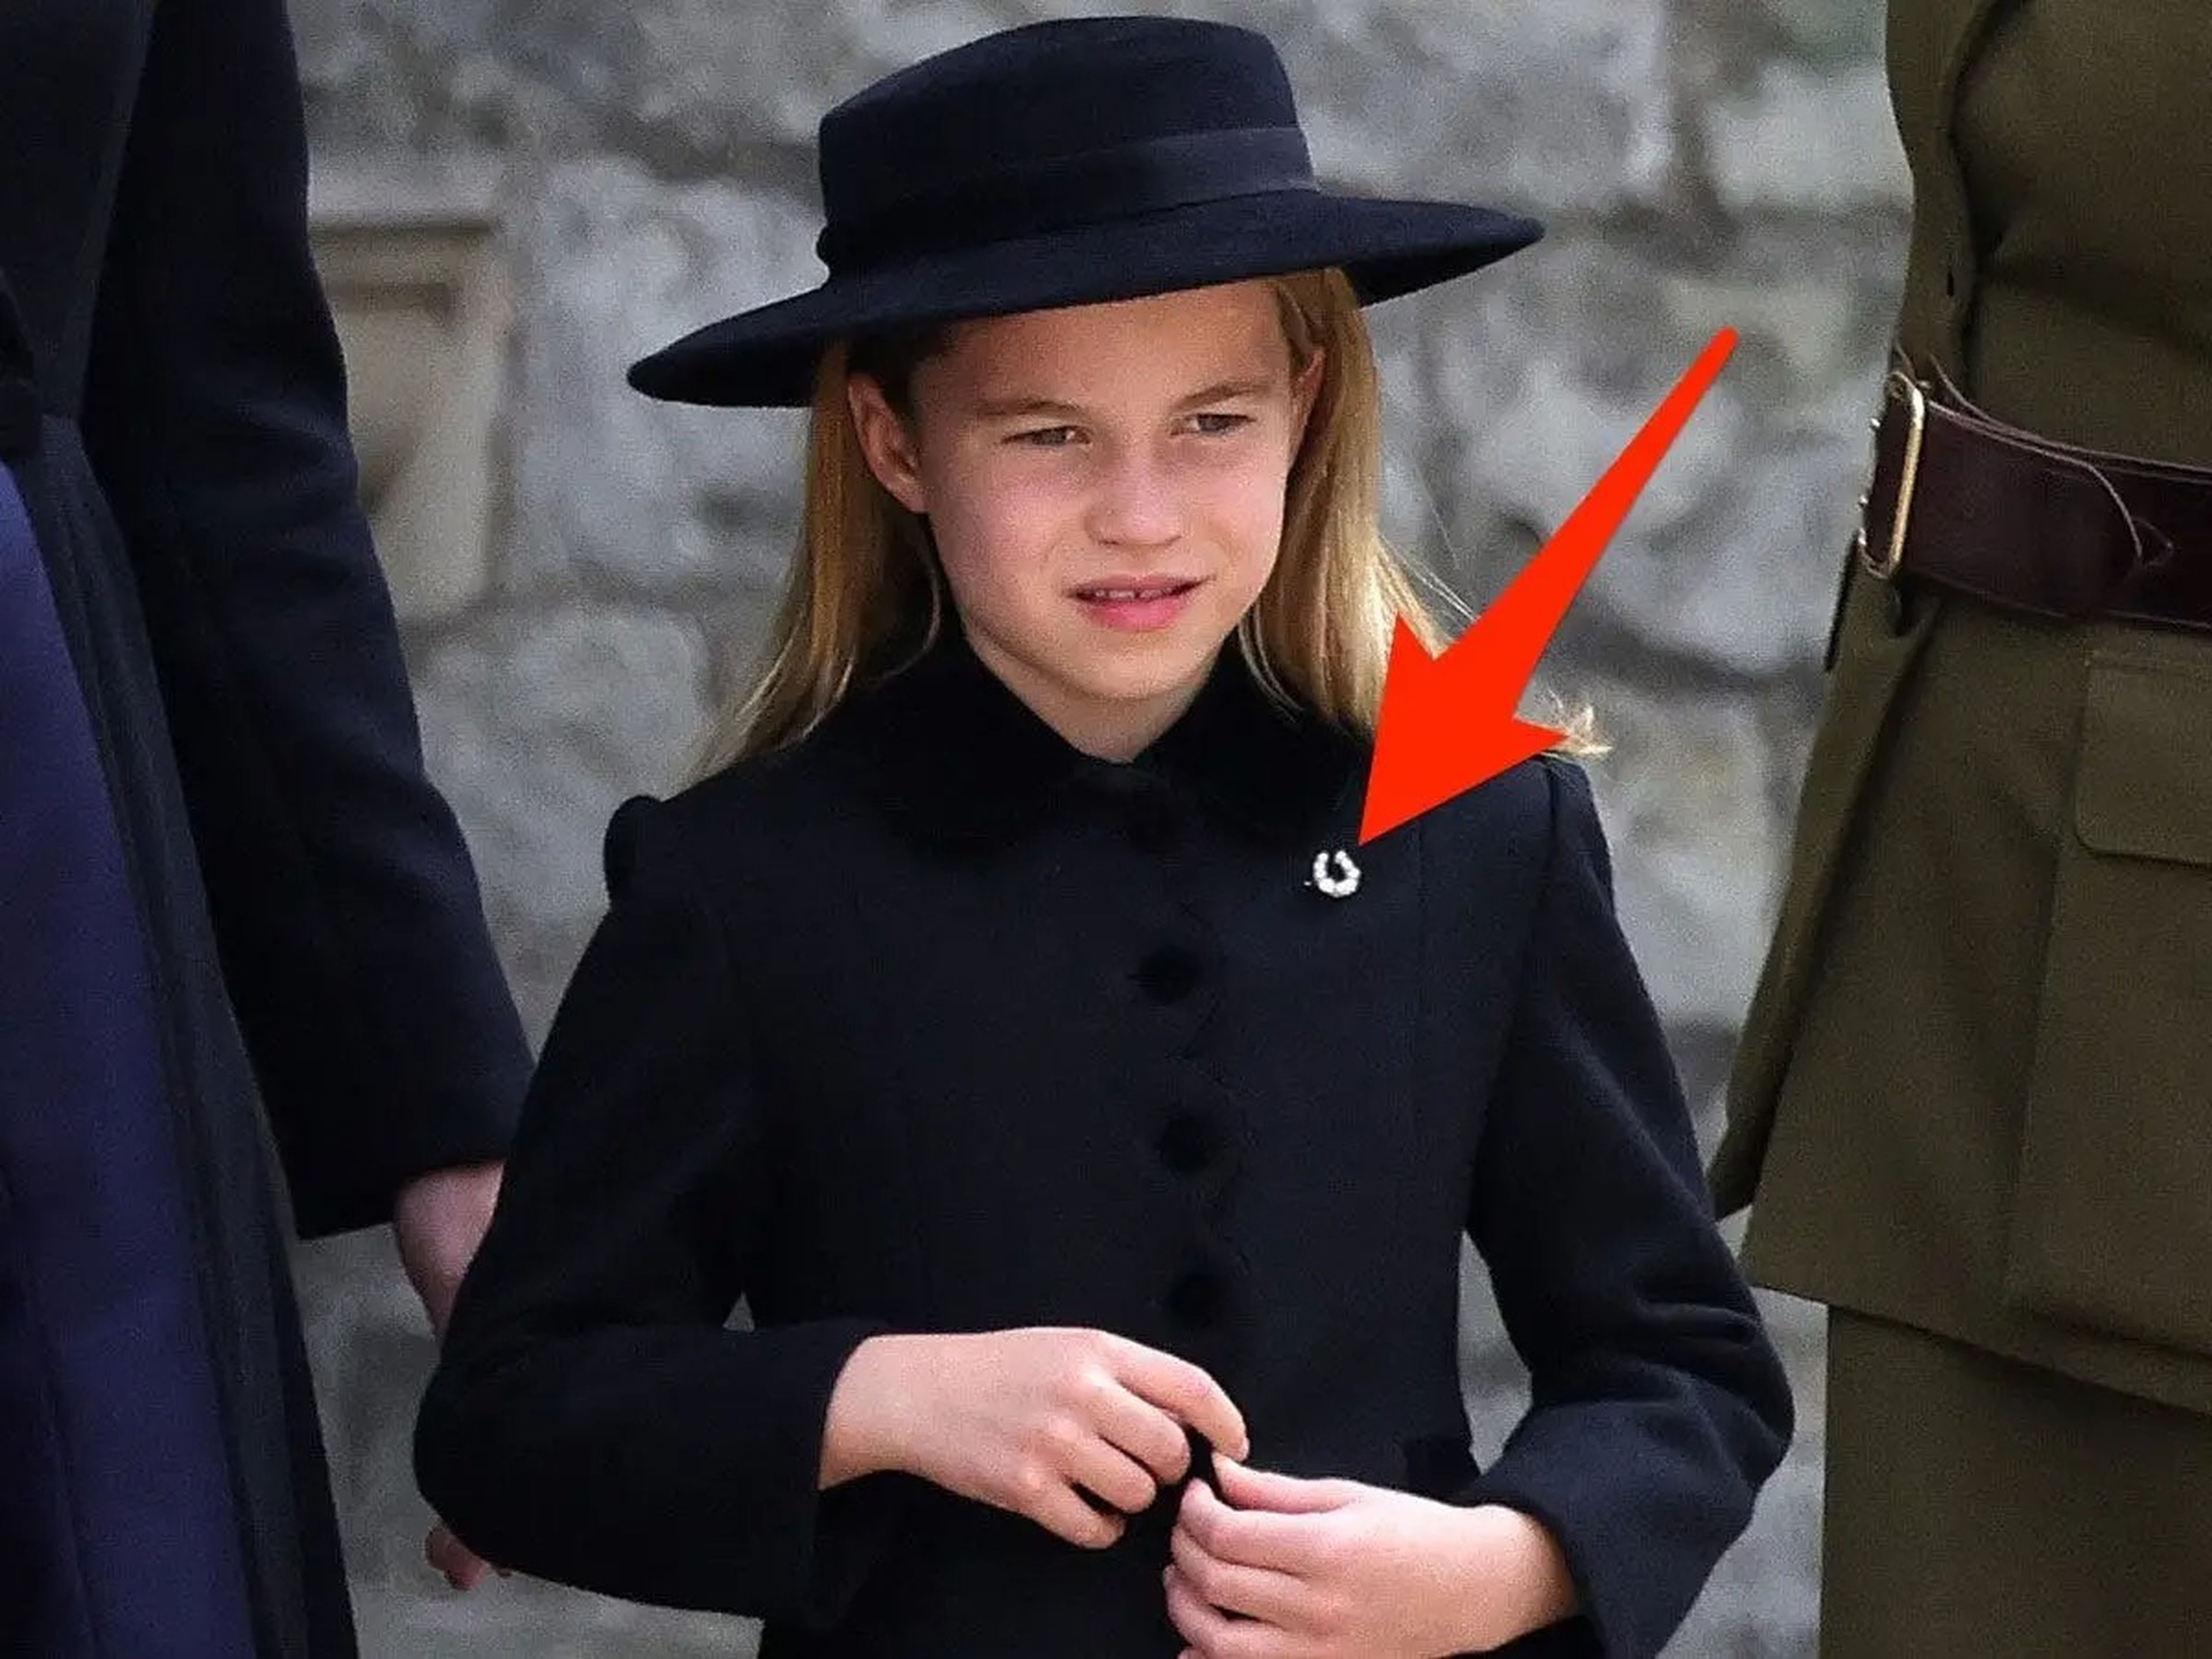 La reina le regaló a su bisnieta un broche.